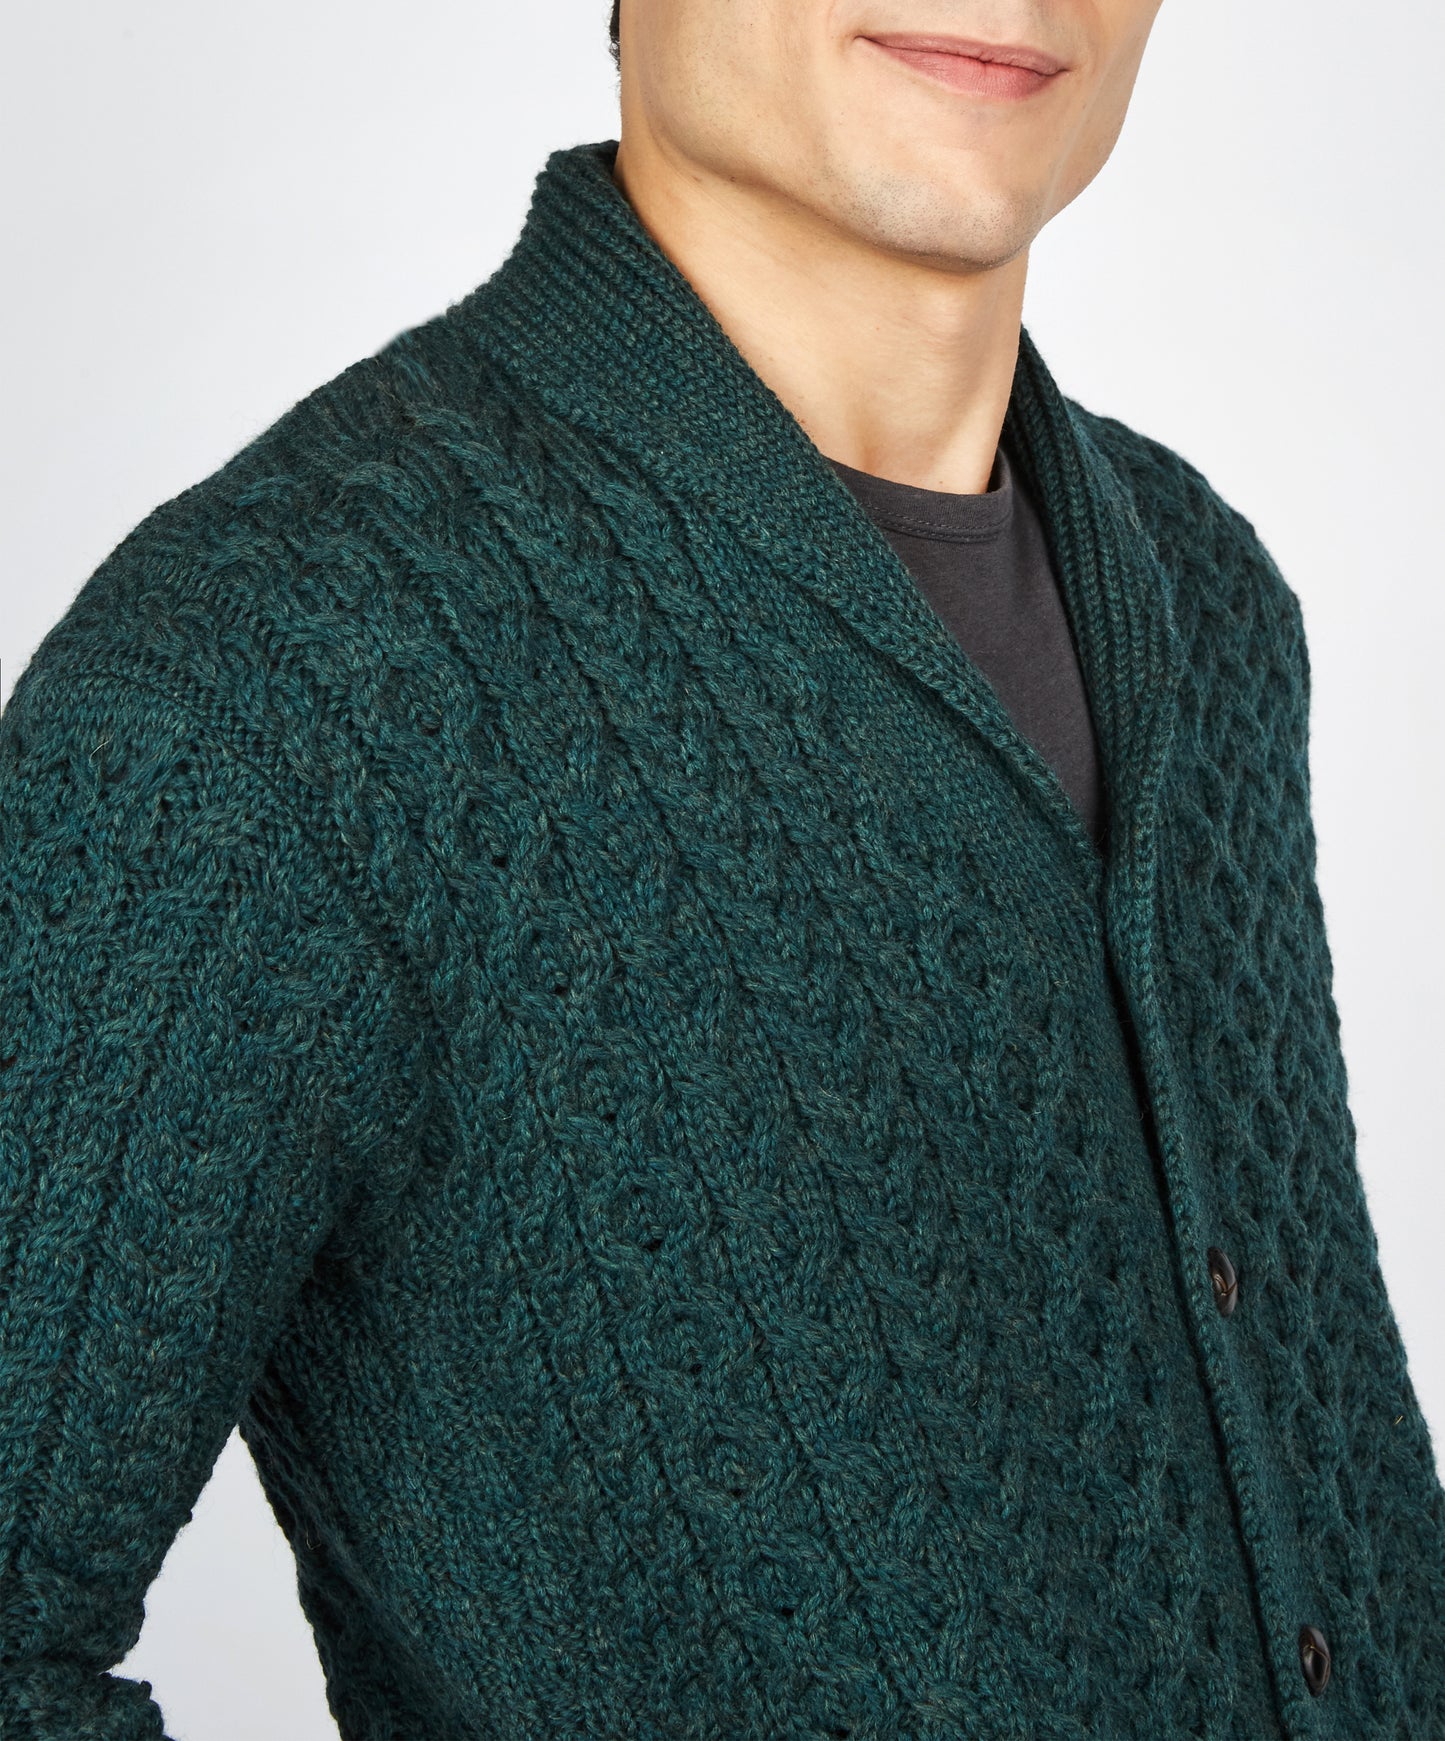 IrelandsEye Knitwear 'Woodford' Aran Cardigan in Evergreen Merino